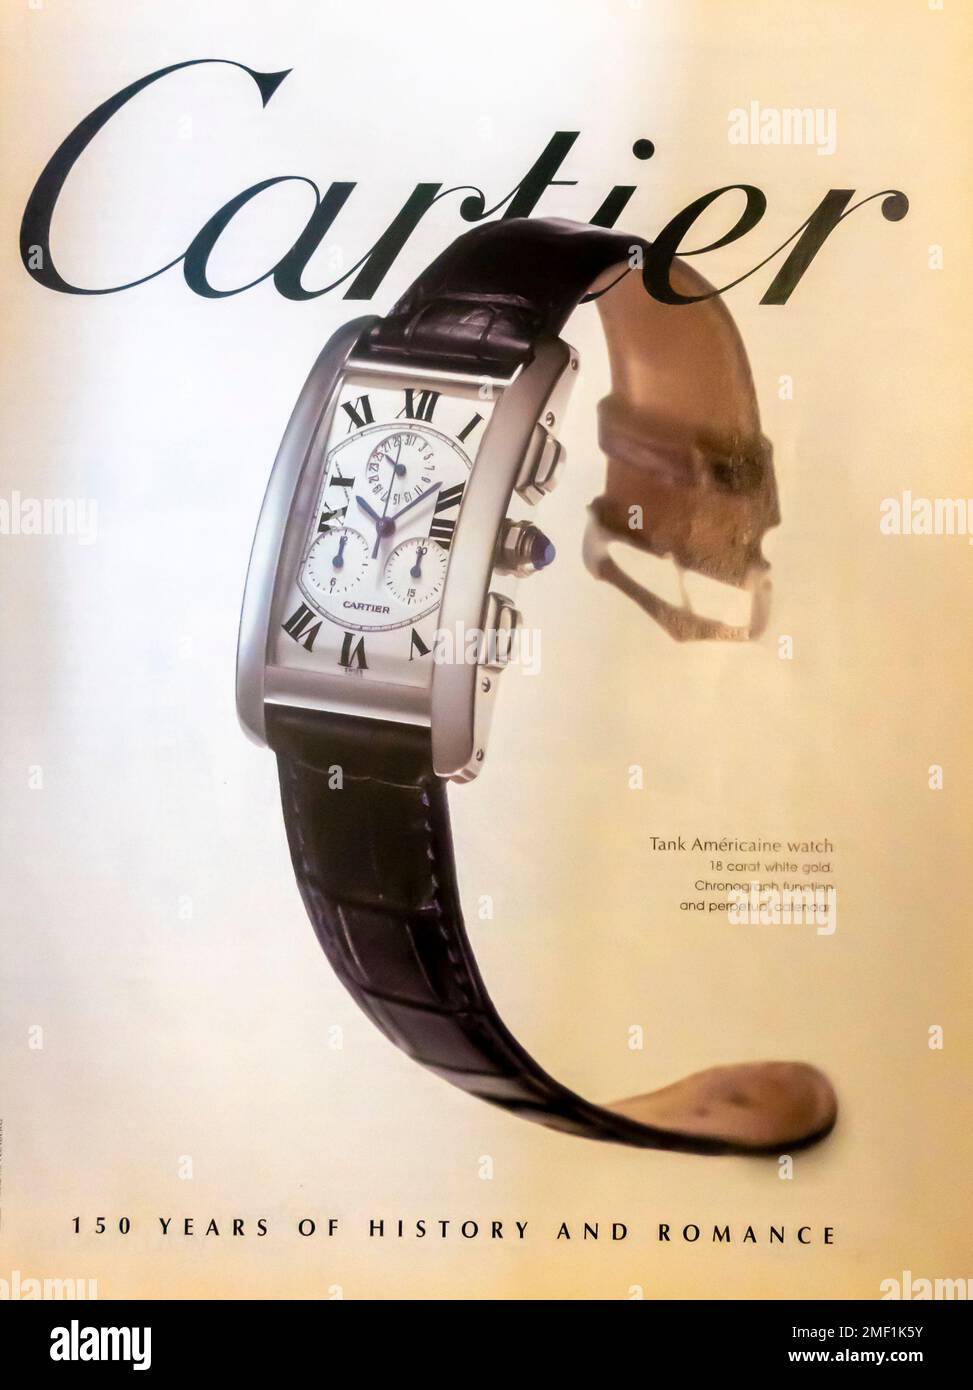 Cartier Tamk Americaine watch advert TIME magazine - winter 97-98 Stock ...